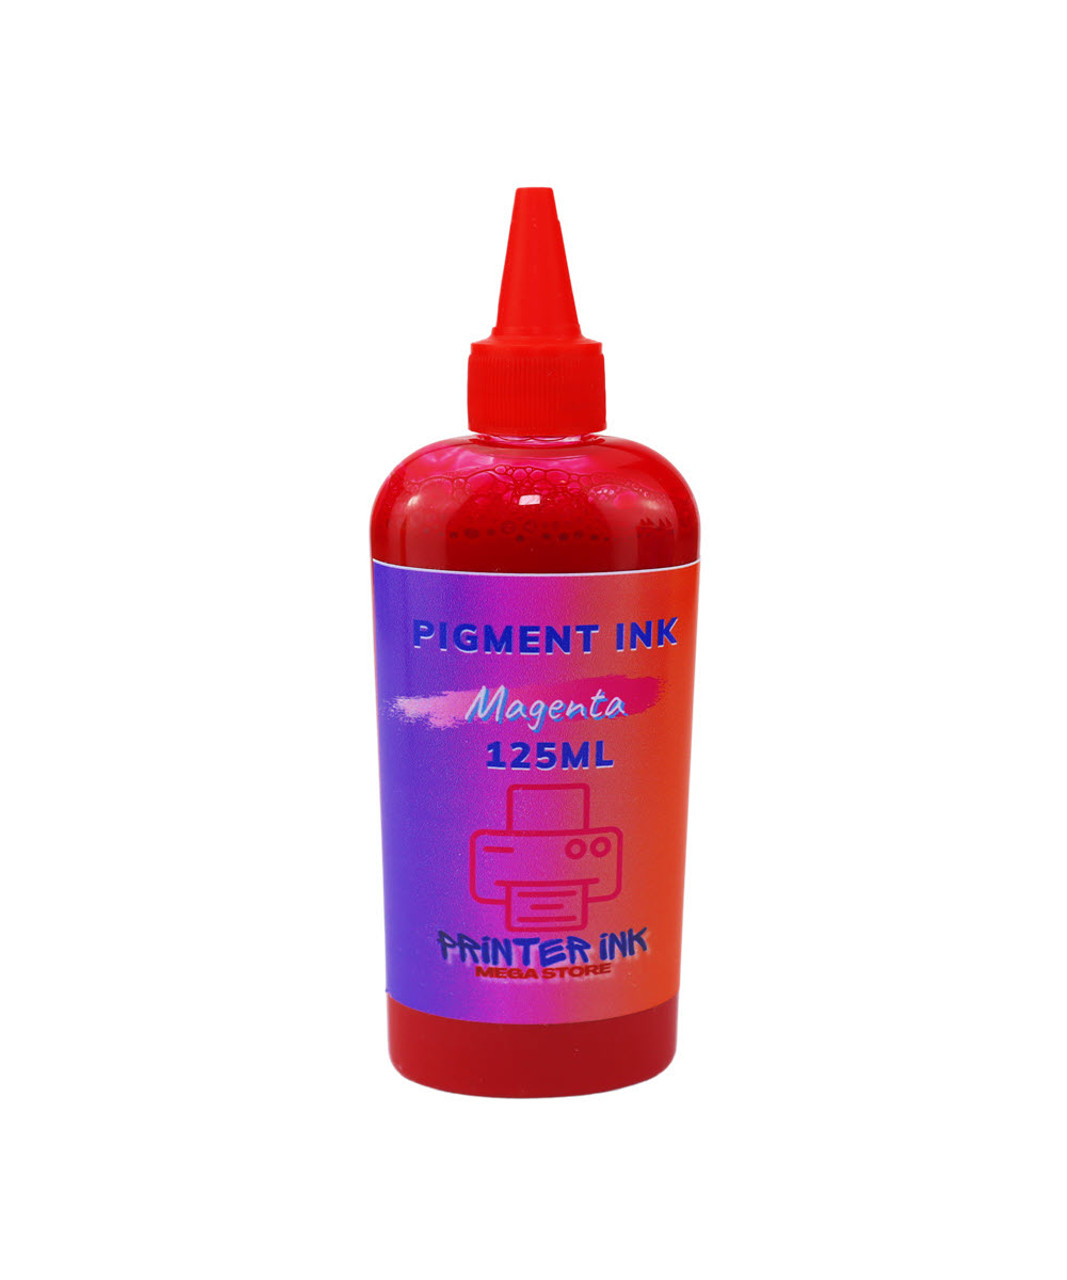 Magenta Pigment Ink 125ml bottle for Epson WorkForce WF-7210 WF-7710 WF-7720 printers